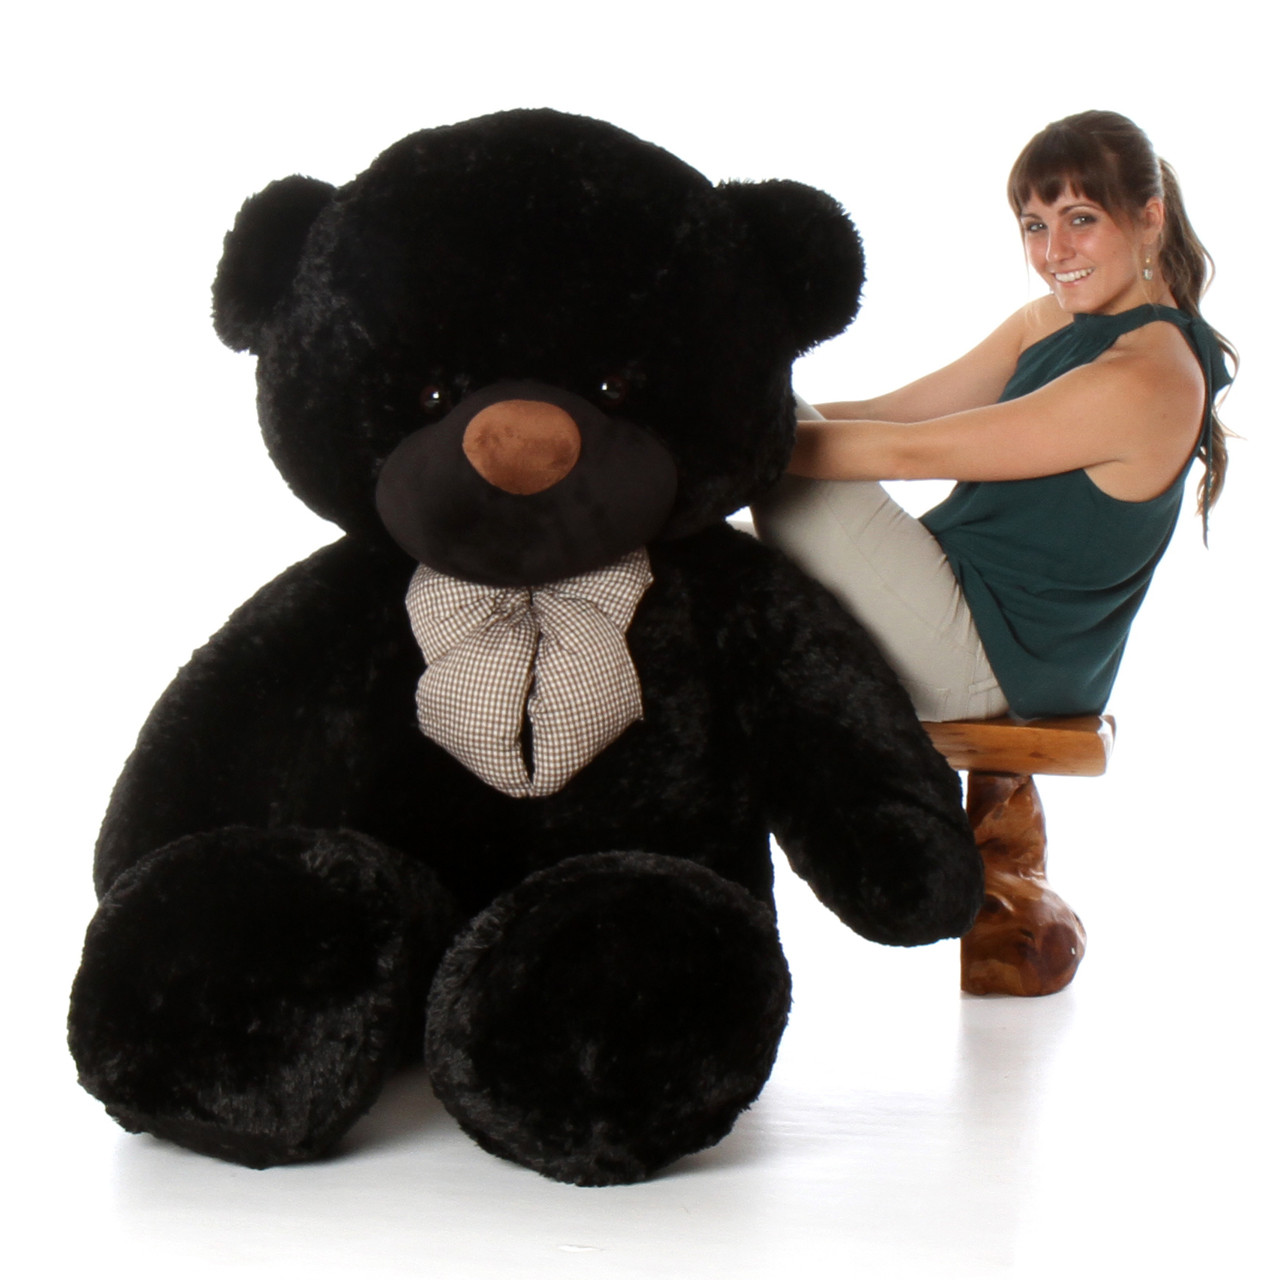 6ft Life Size Teddy Bear Juju Cuddles soft and huggable 